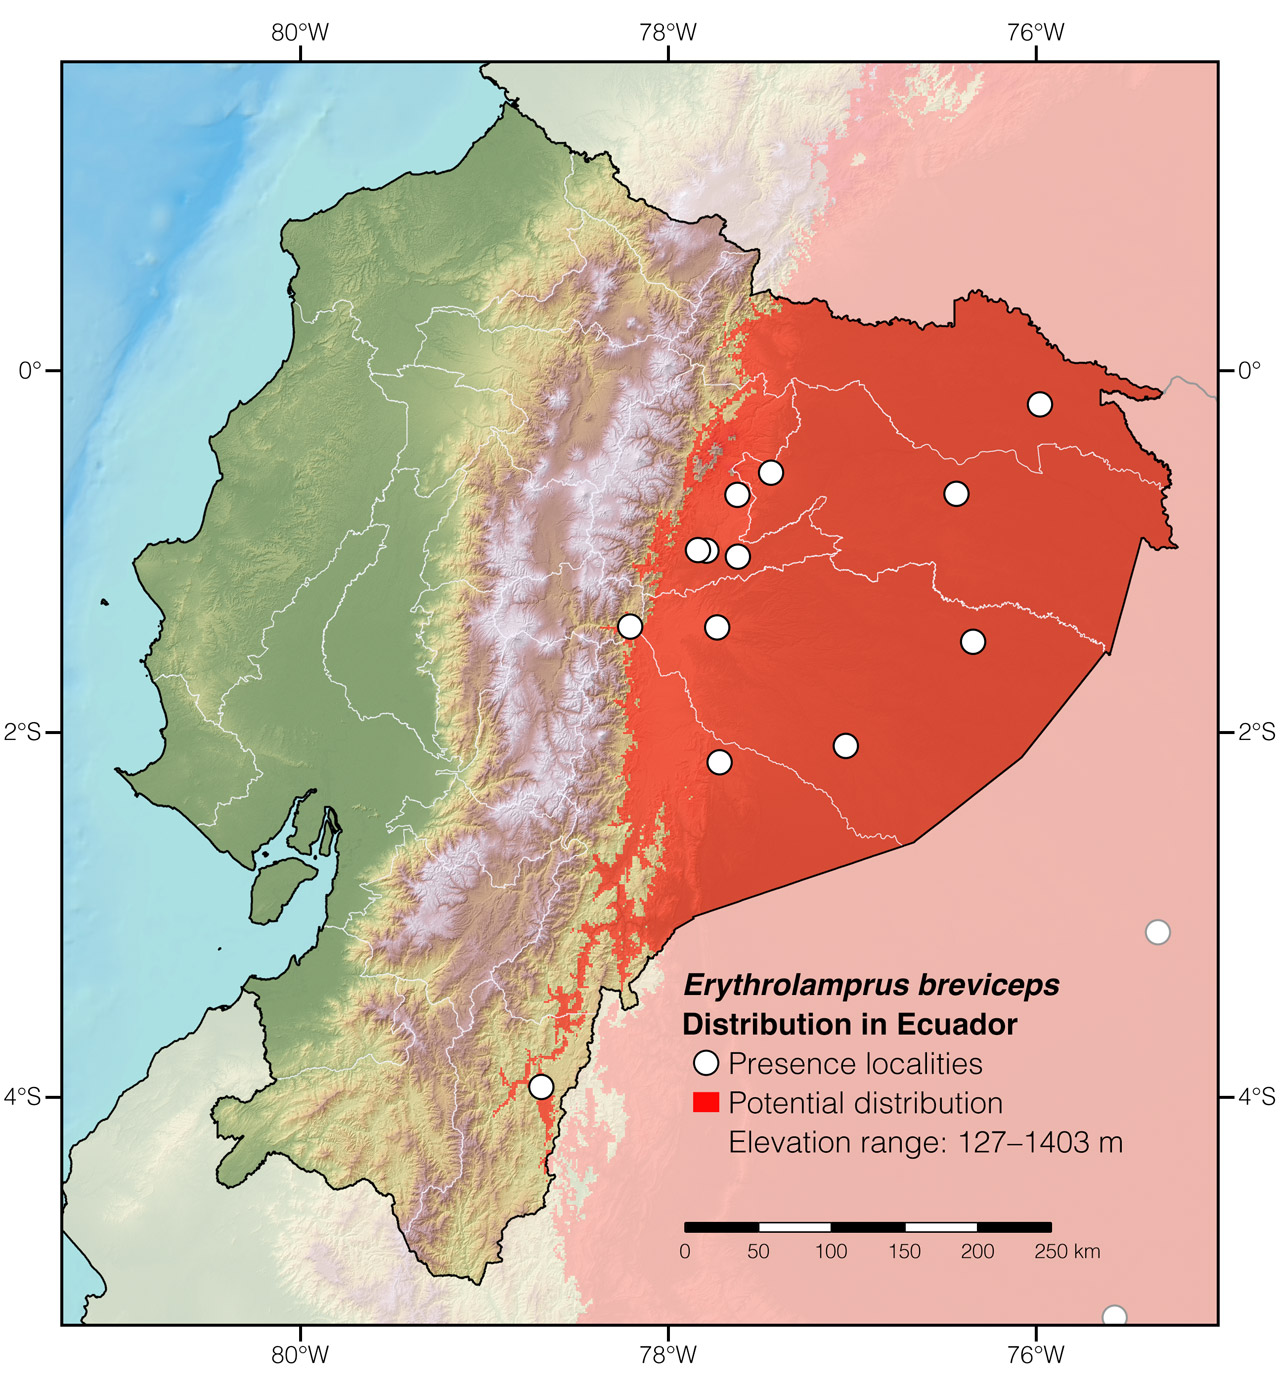 Distribution of Erythrolamprus breviceps in Ecuador